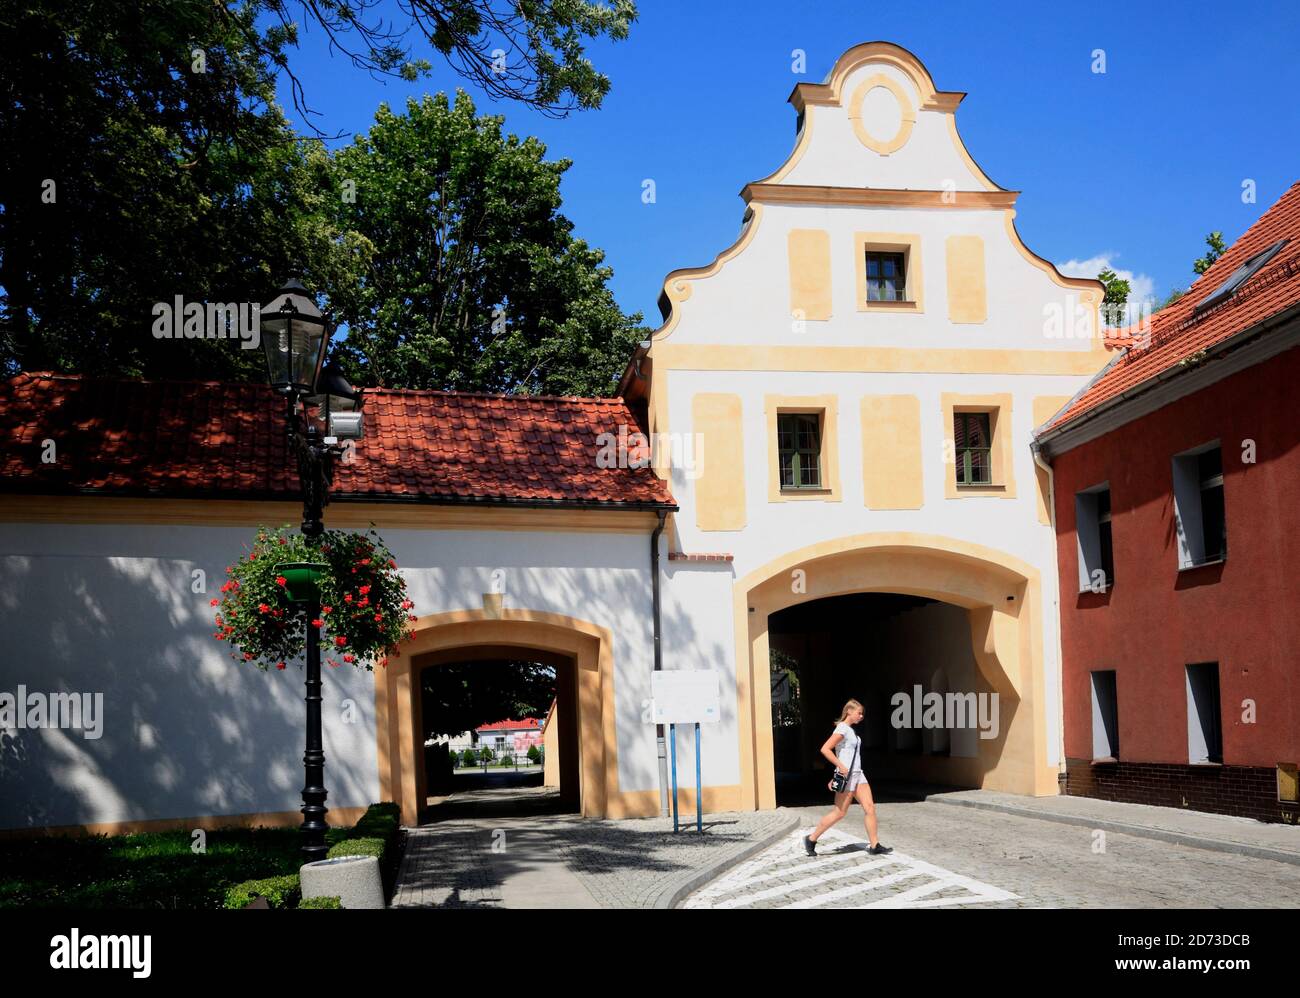 Brama Zamkowa (Schlossstor), Glogowek (Oberglogau), Silésie, Pologne, Europe Banque D'Images